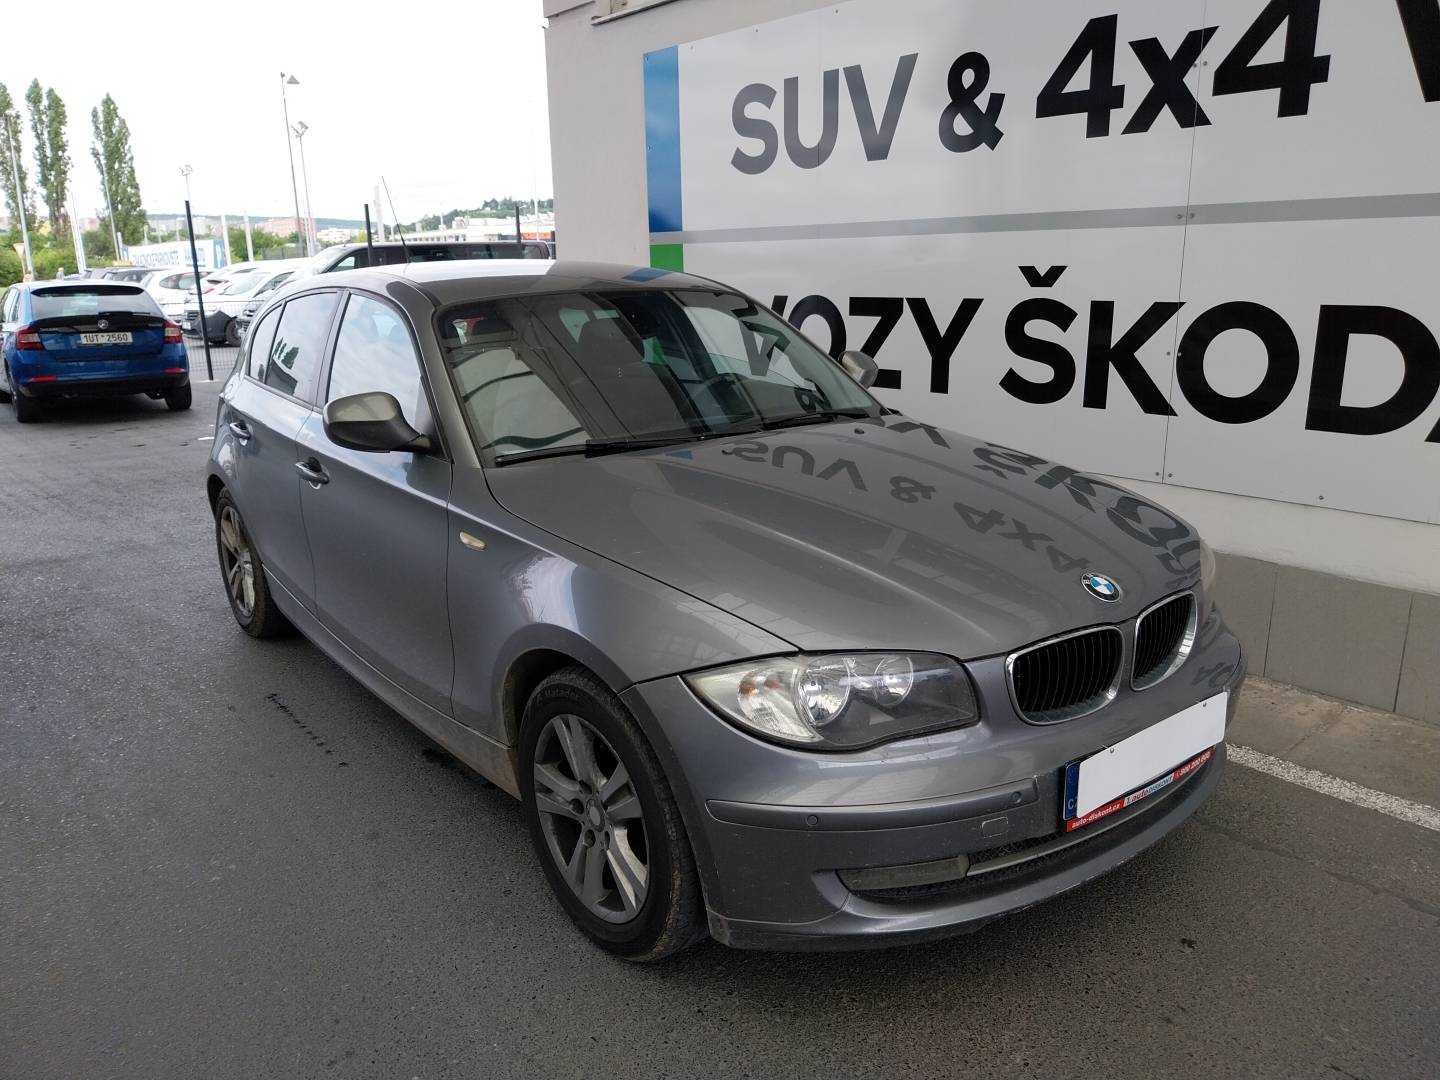 BMW 1, 2010, 118d, 105kW